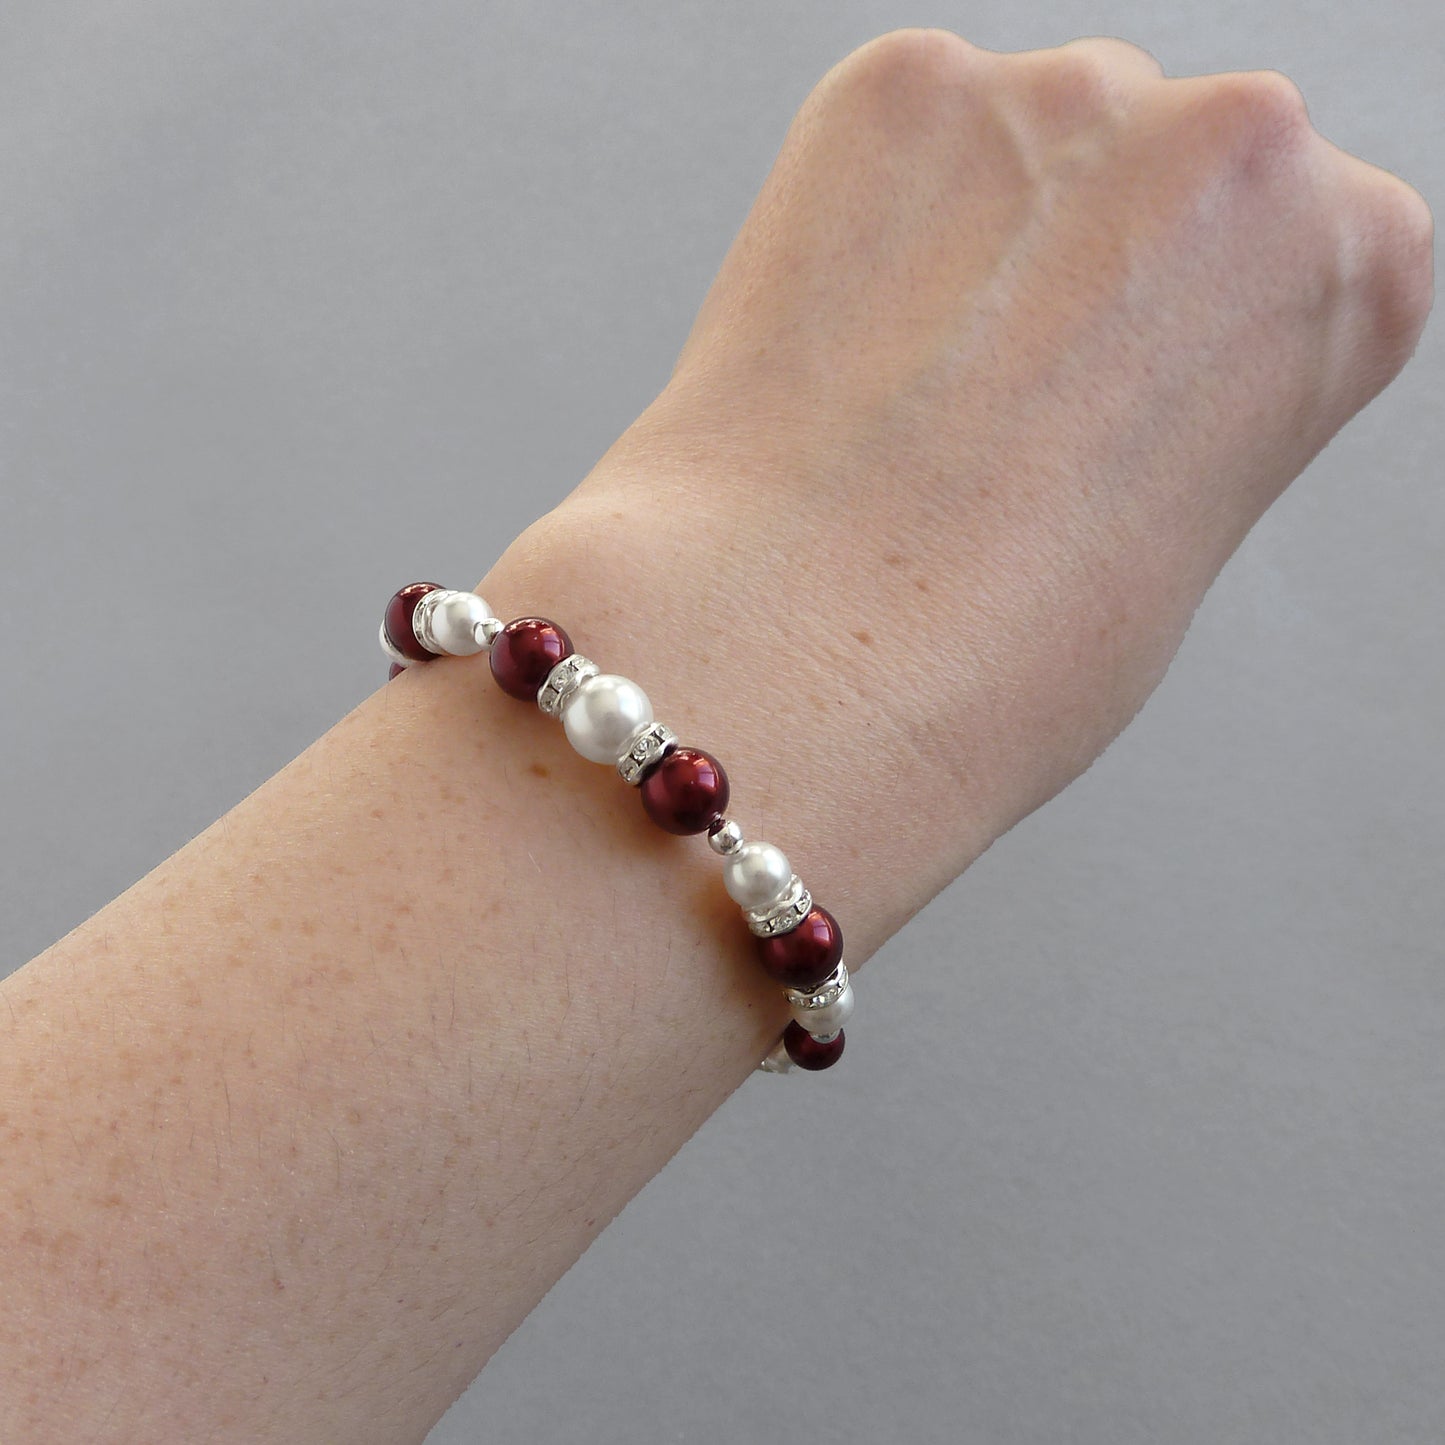 Burgundy pearl and crystal bracelet